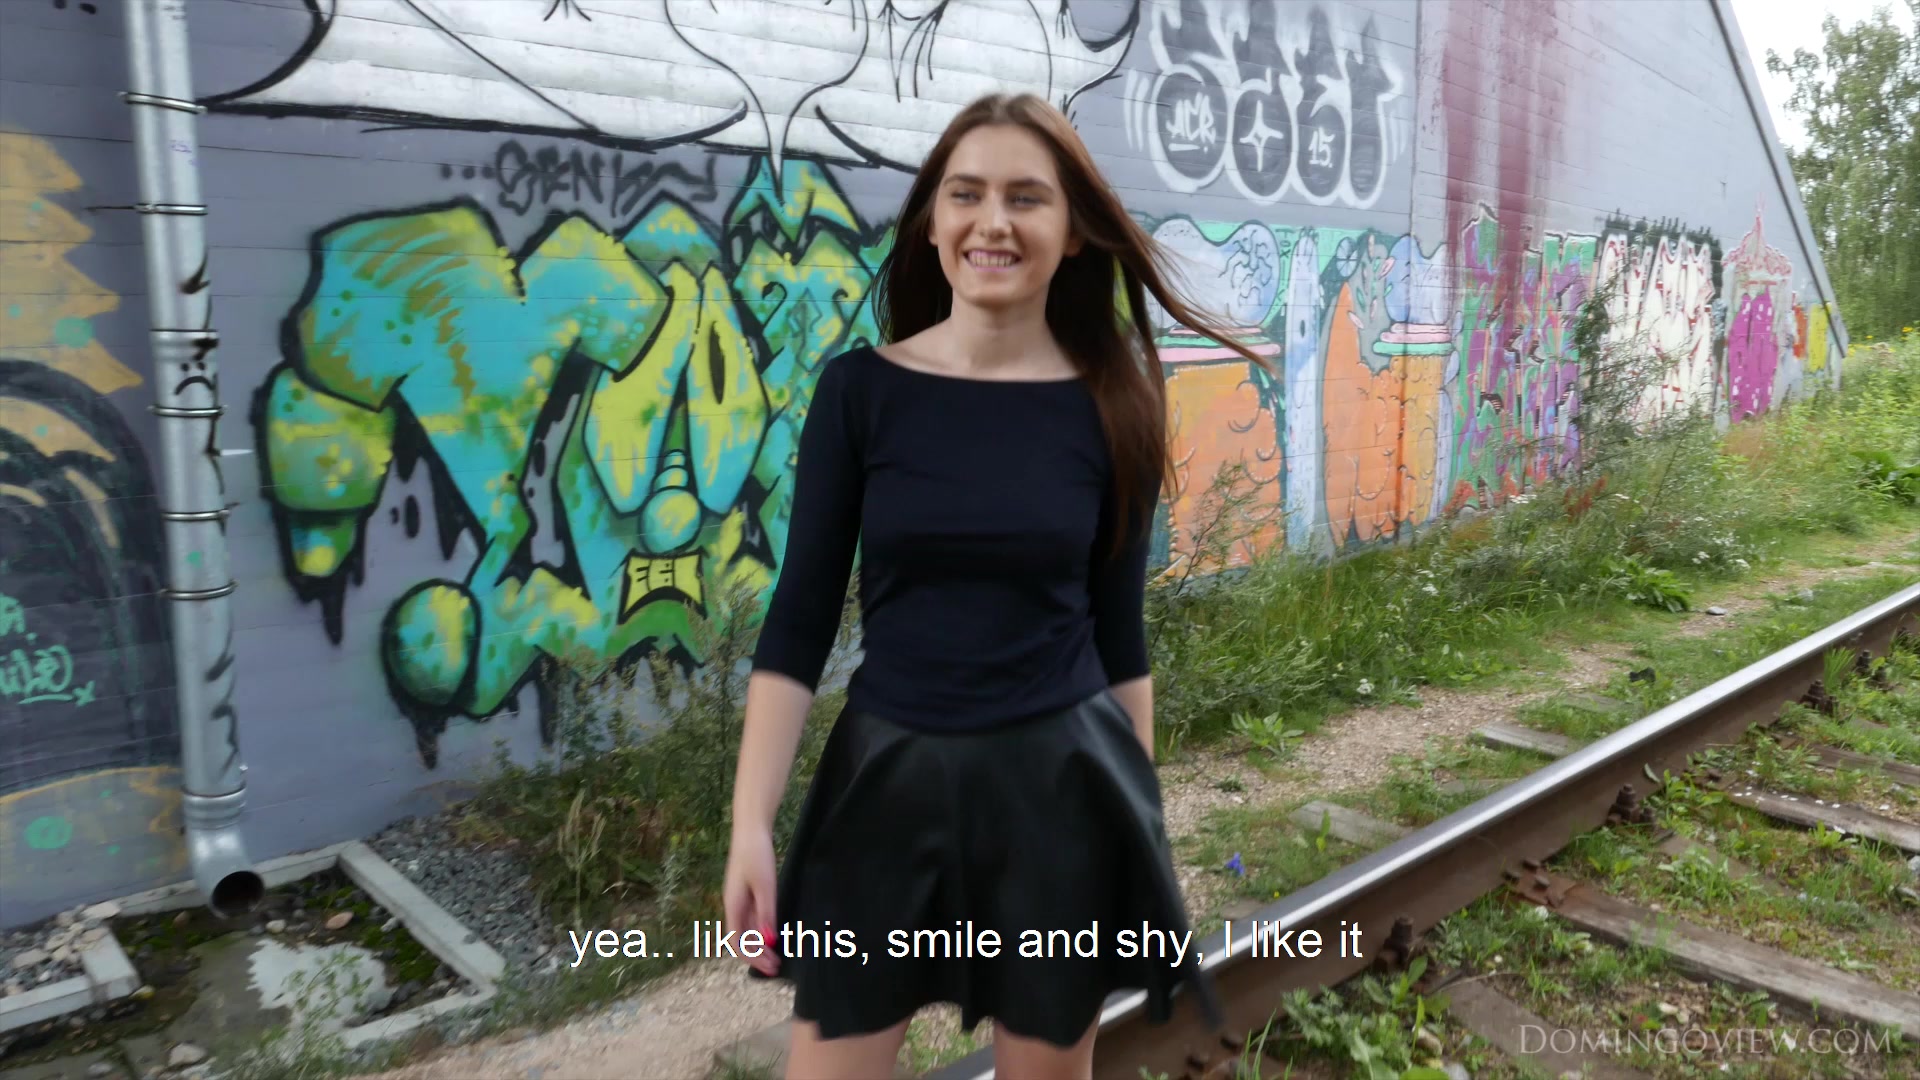 Sanija - After Photo Shoot At Graffiti Wall Nude Interv